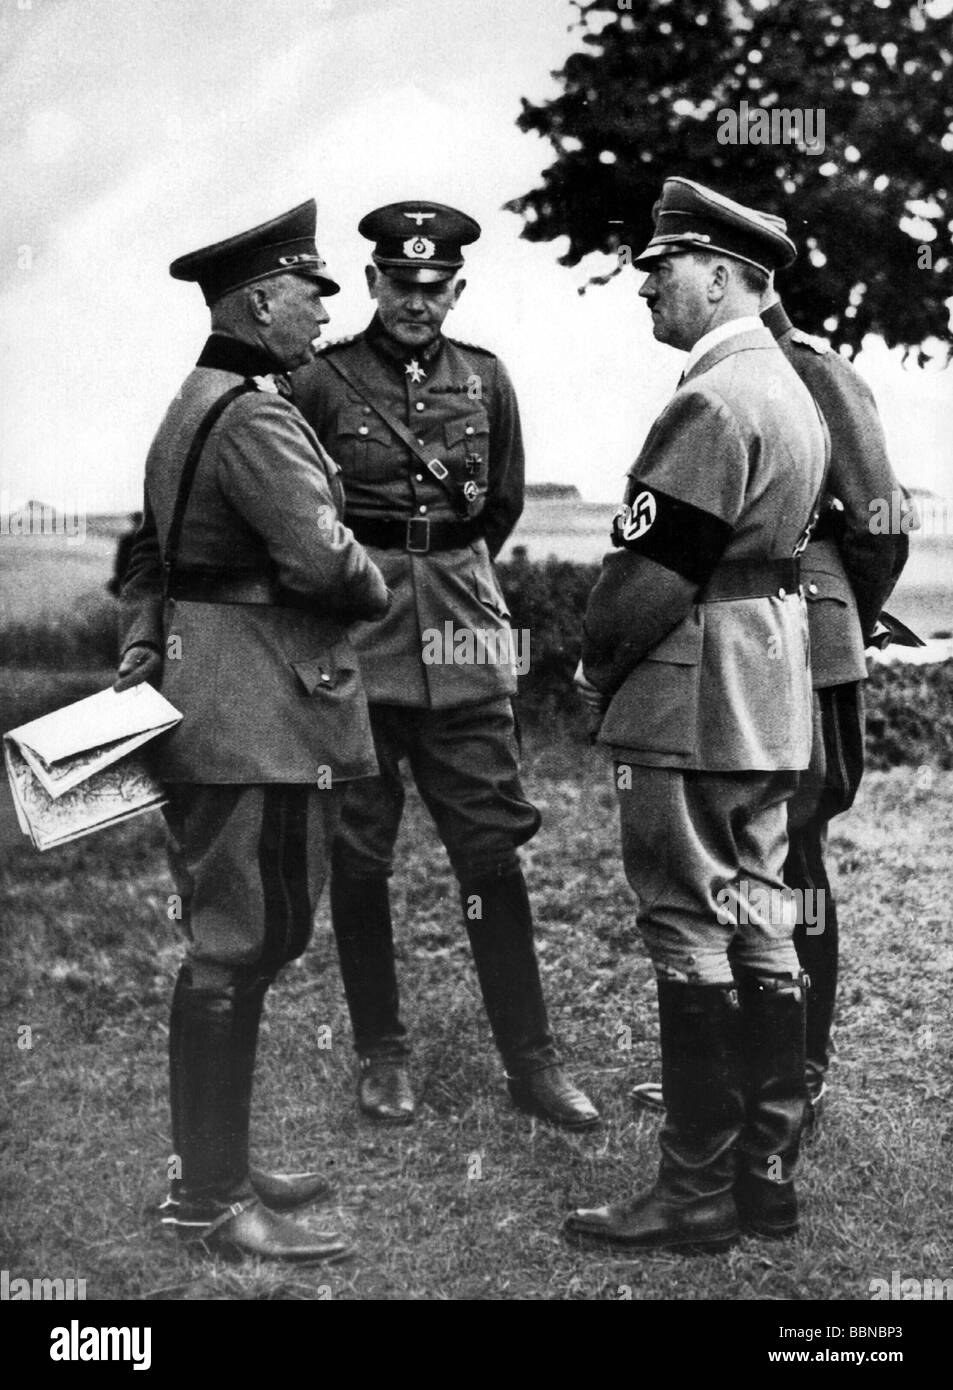 Hitler, Adolf, 20.4.1889 - 30.4.1945, Chancelier politicien allemand (NSDAP) depuis 30.1.1933, en pleine longueur, avec les généraux Werner von Blomberg et Werner von Fritsch, manoeuvre, Munsterlager, 1935, Banque D'Images